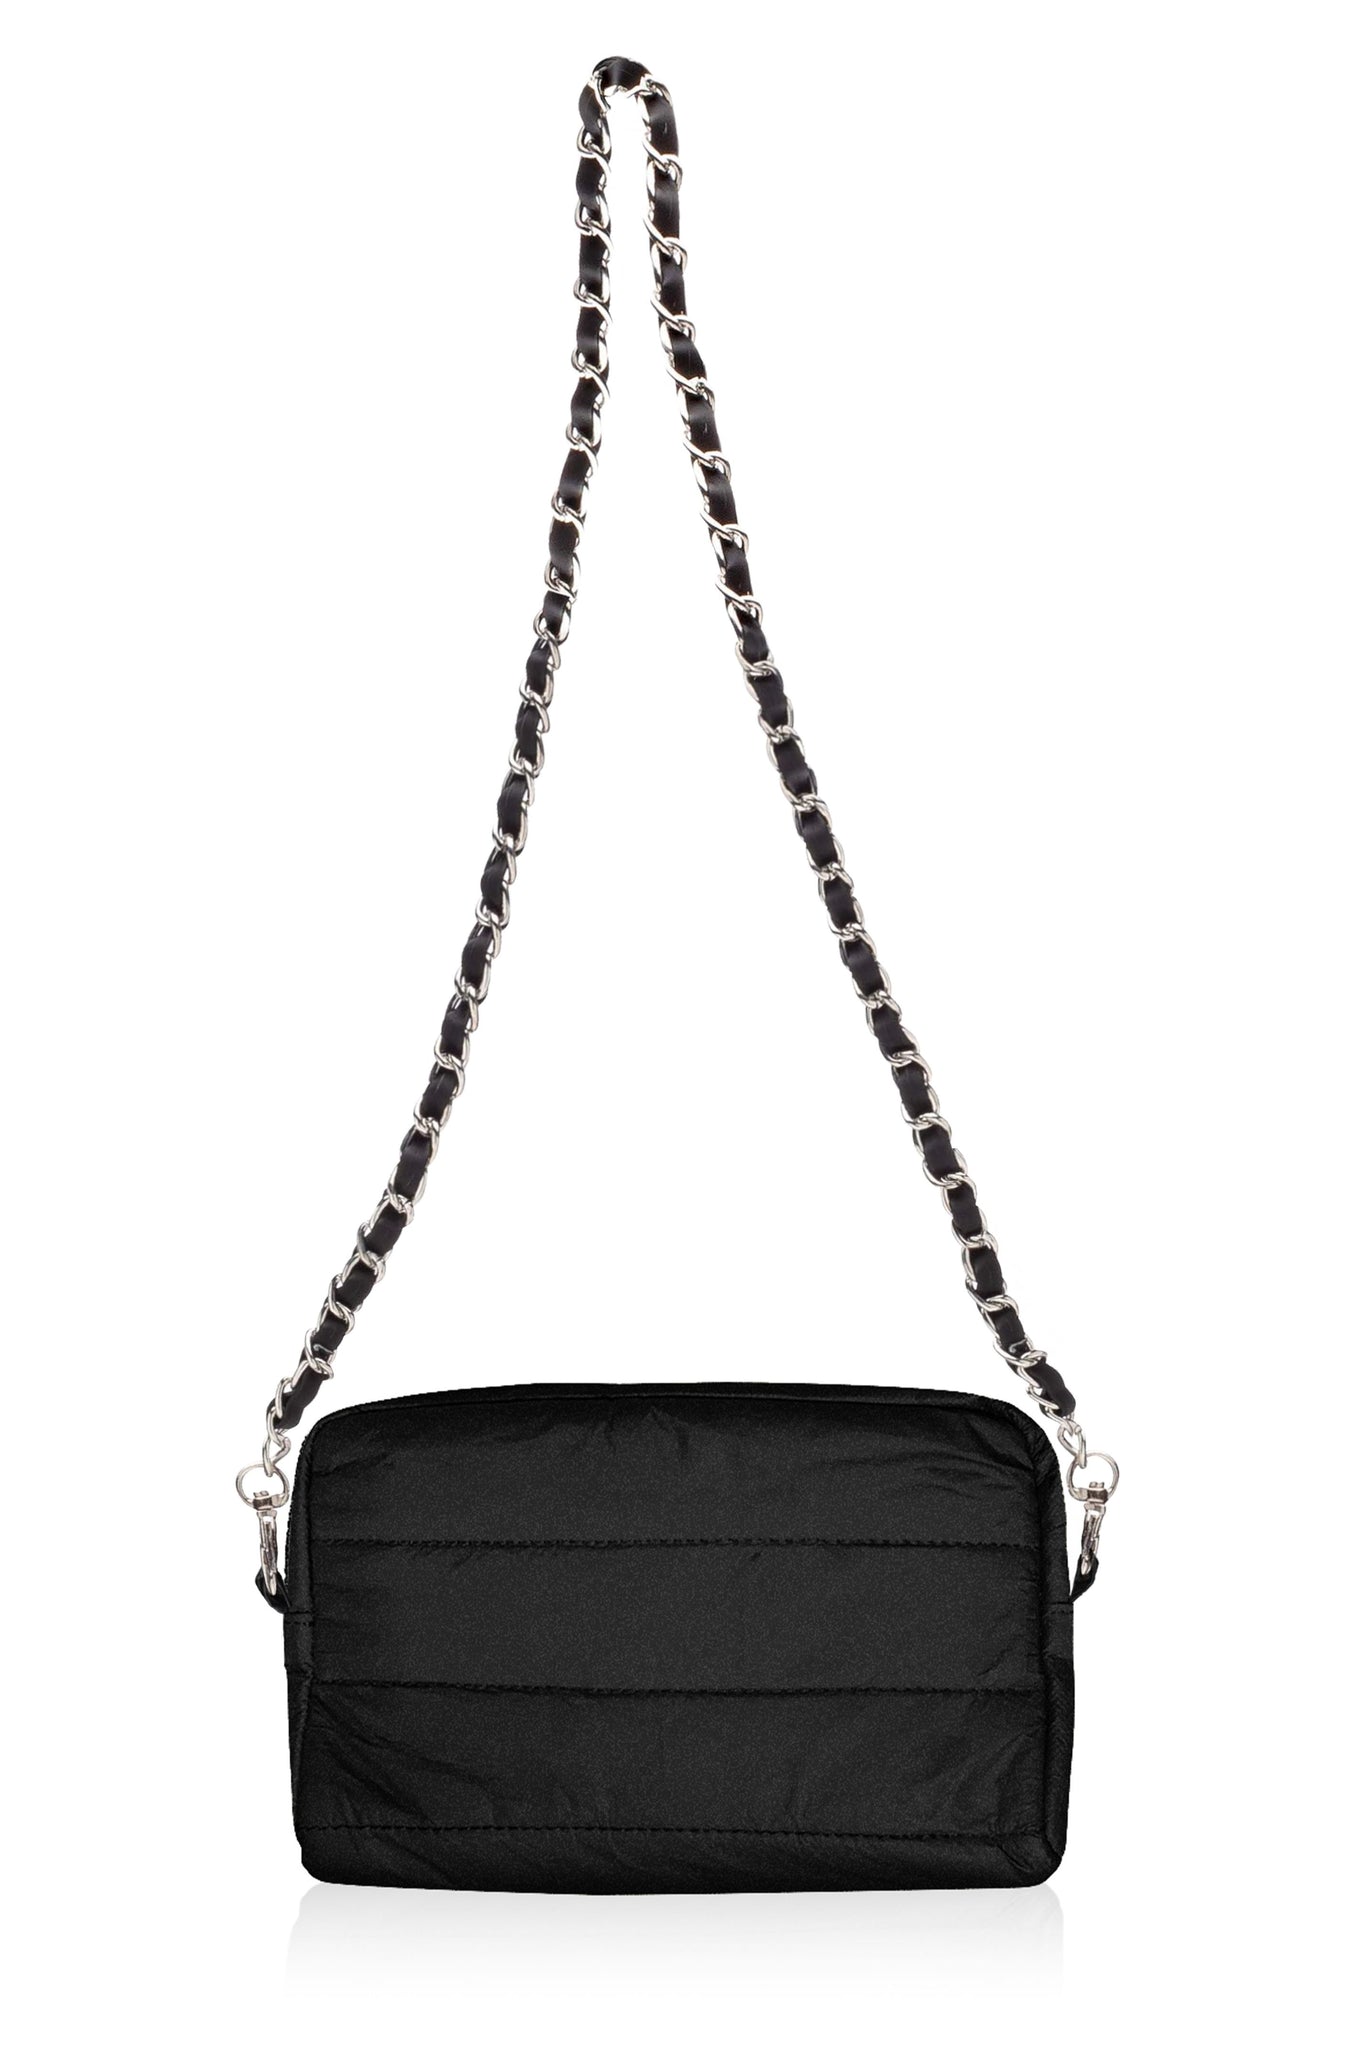 Mini puffer purse in shimmer black with silver chain purse strap